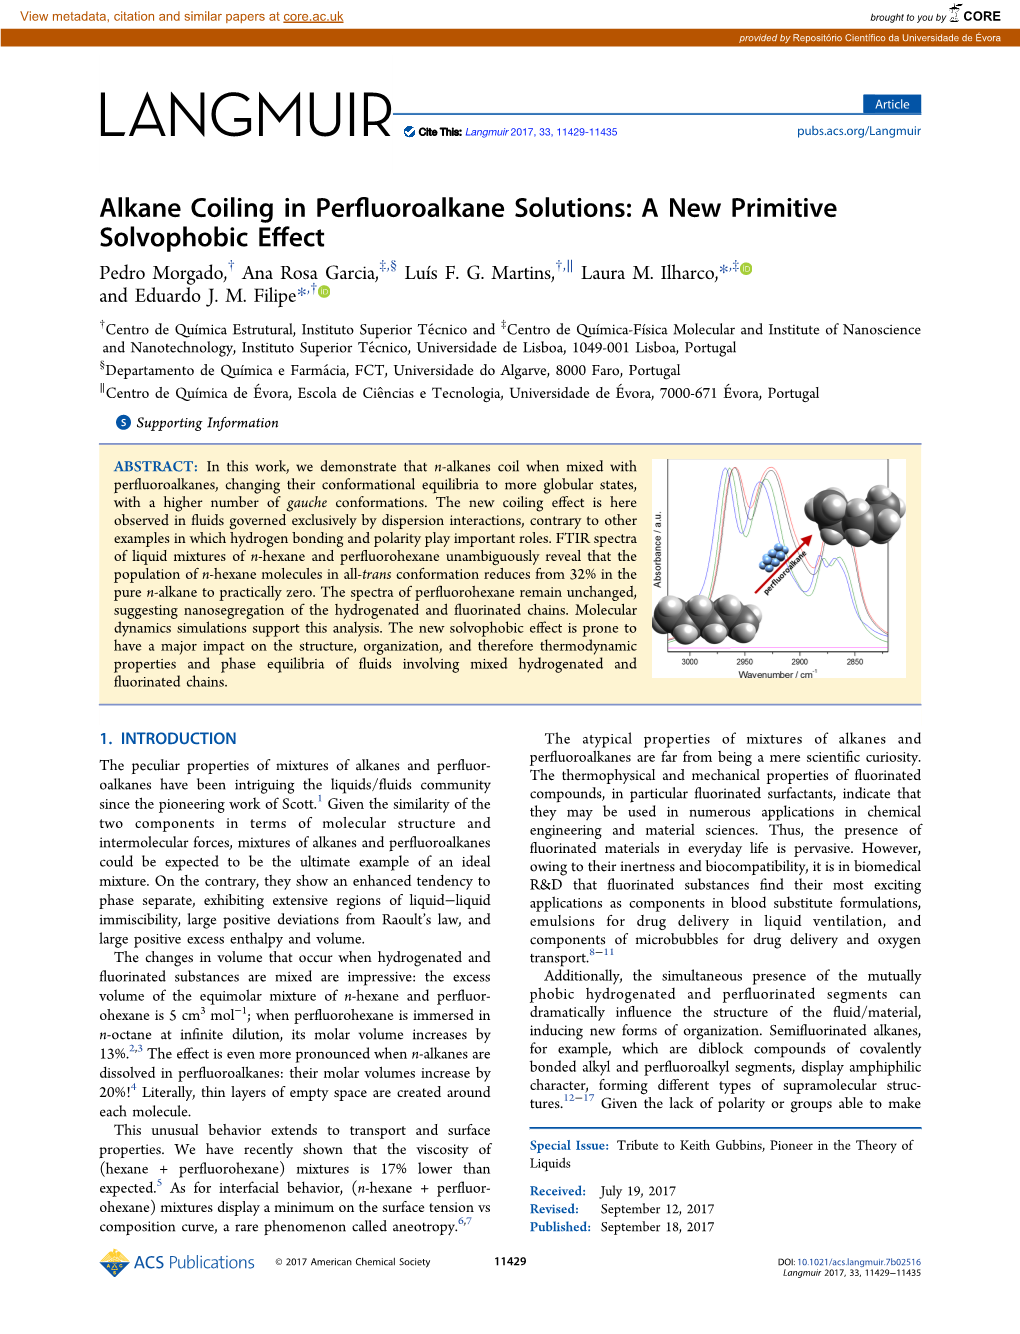 Alkane Coiling in Perfluoroalkane Solutions